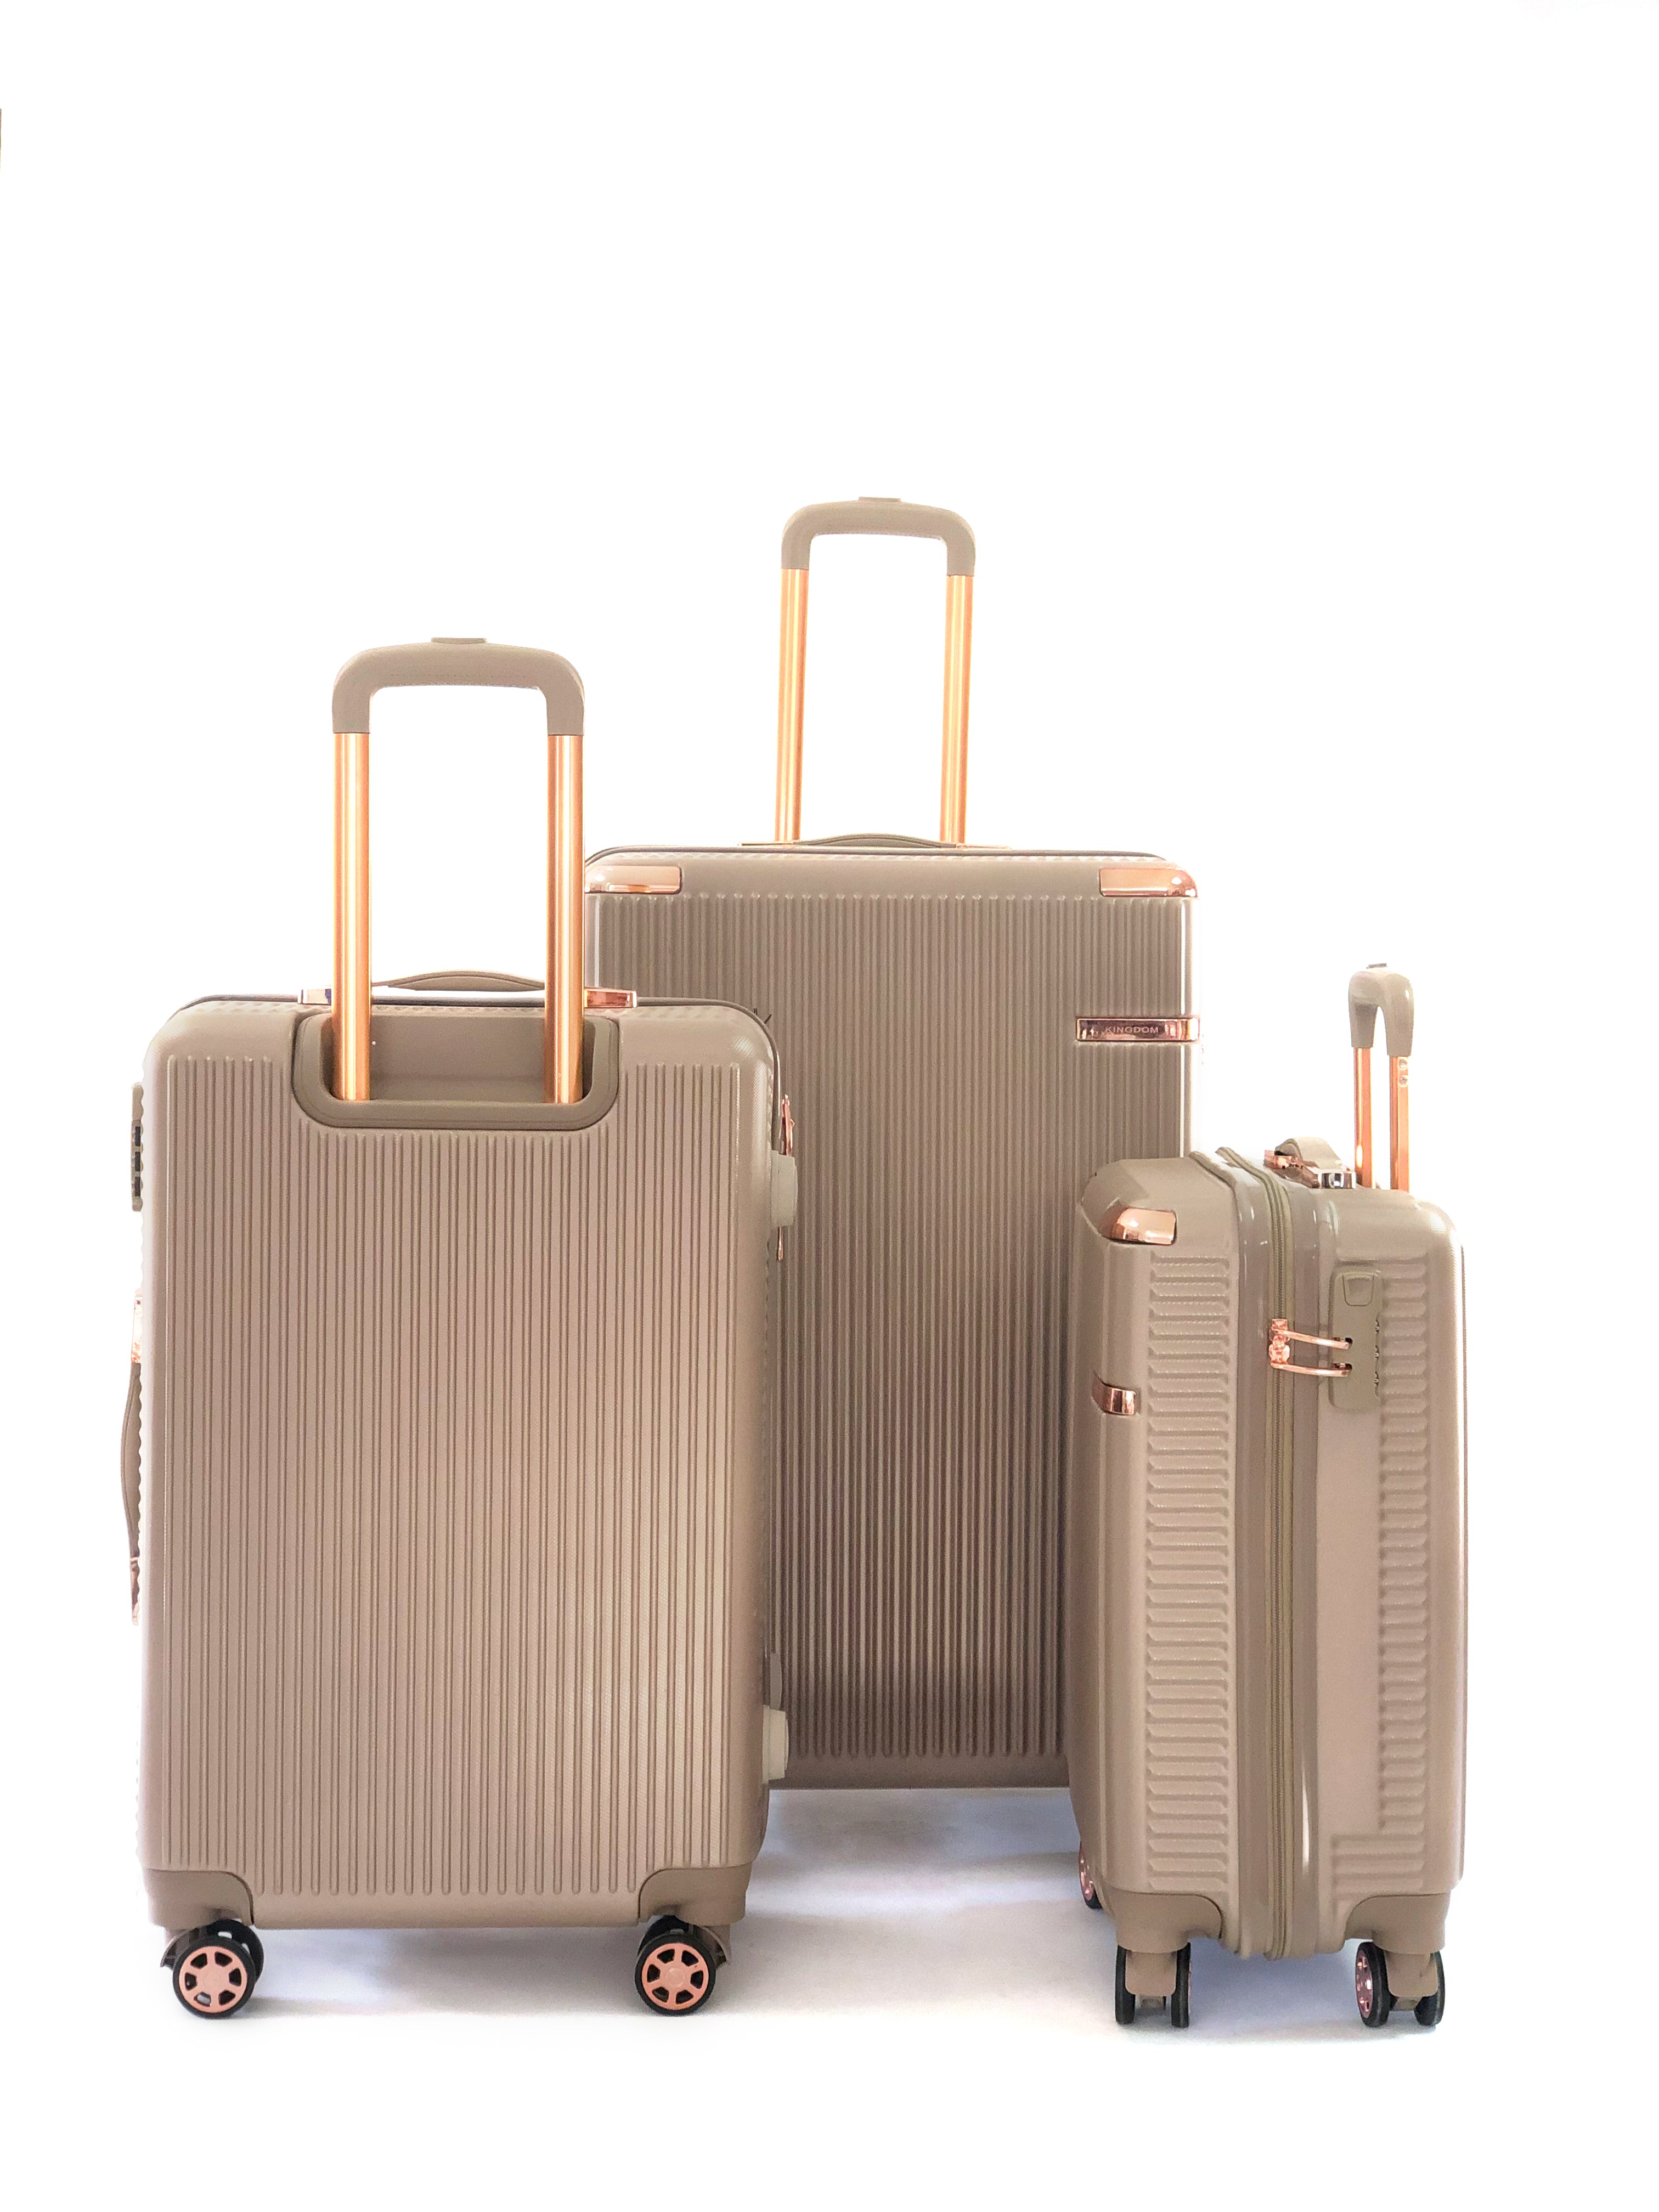 Damani 3 Piece Luggage Set for Sale in Largo, FL - OfferUp